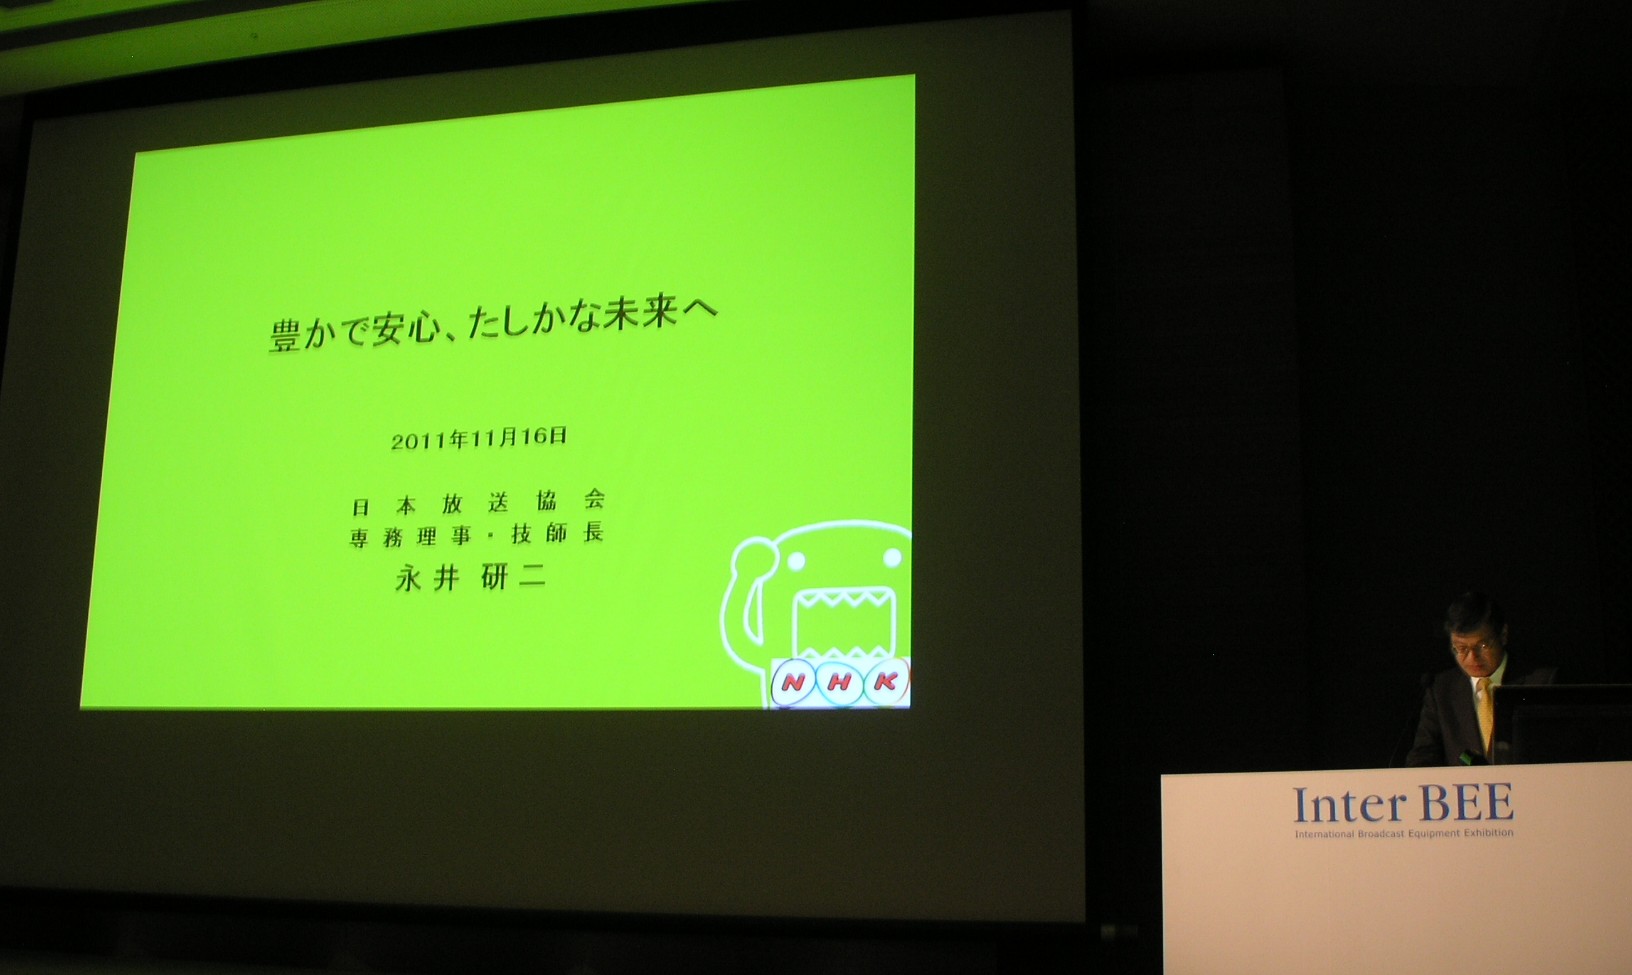 Keynote speech by NHK's chief engineer Mr. Nagai.